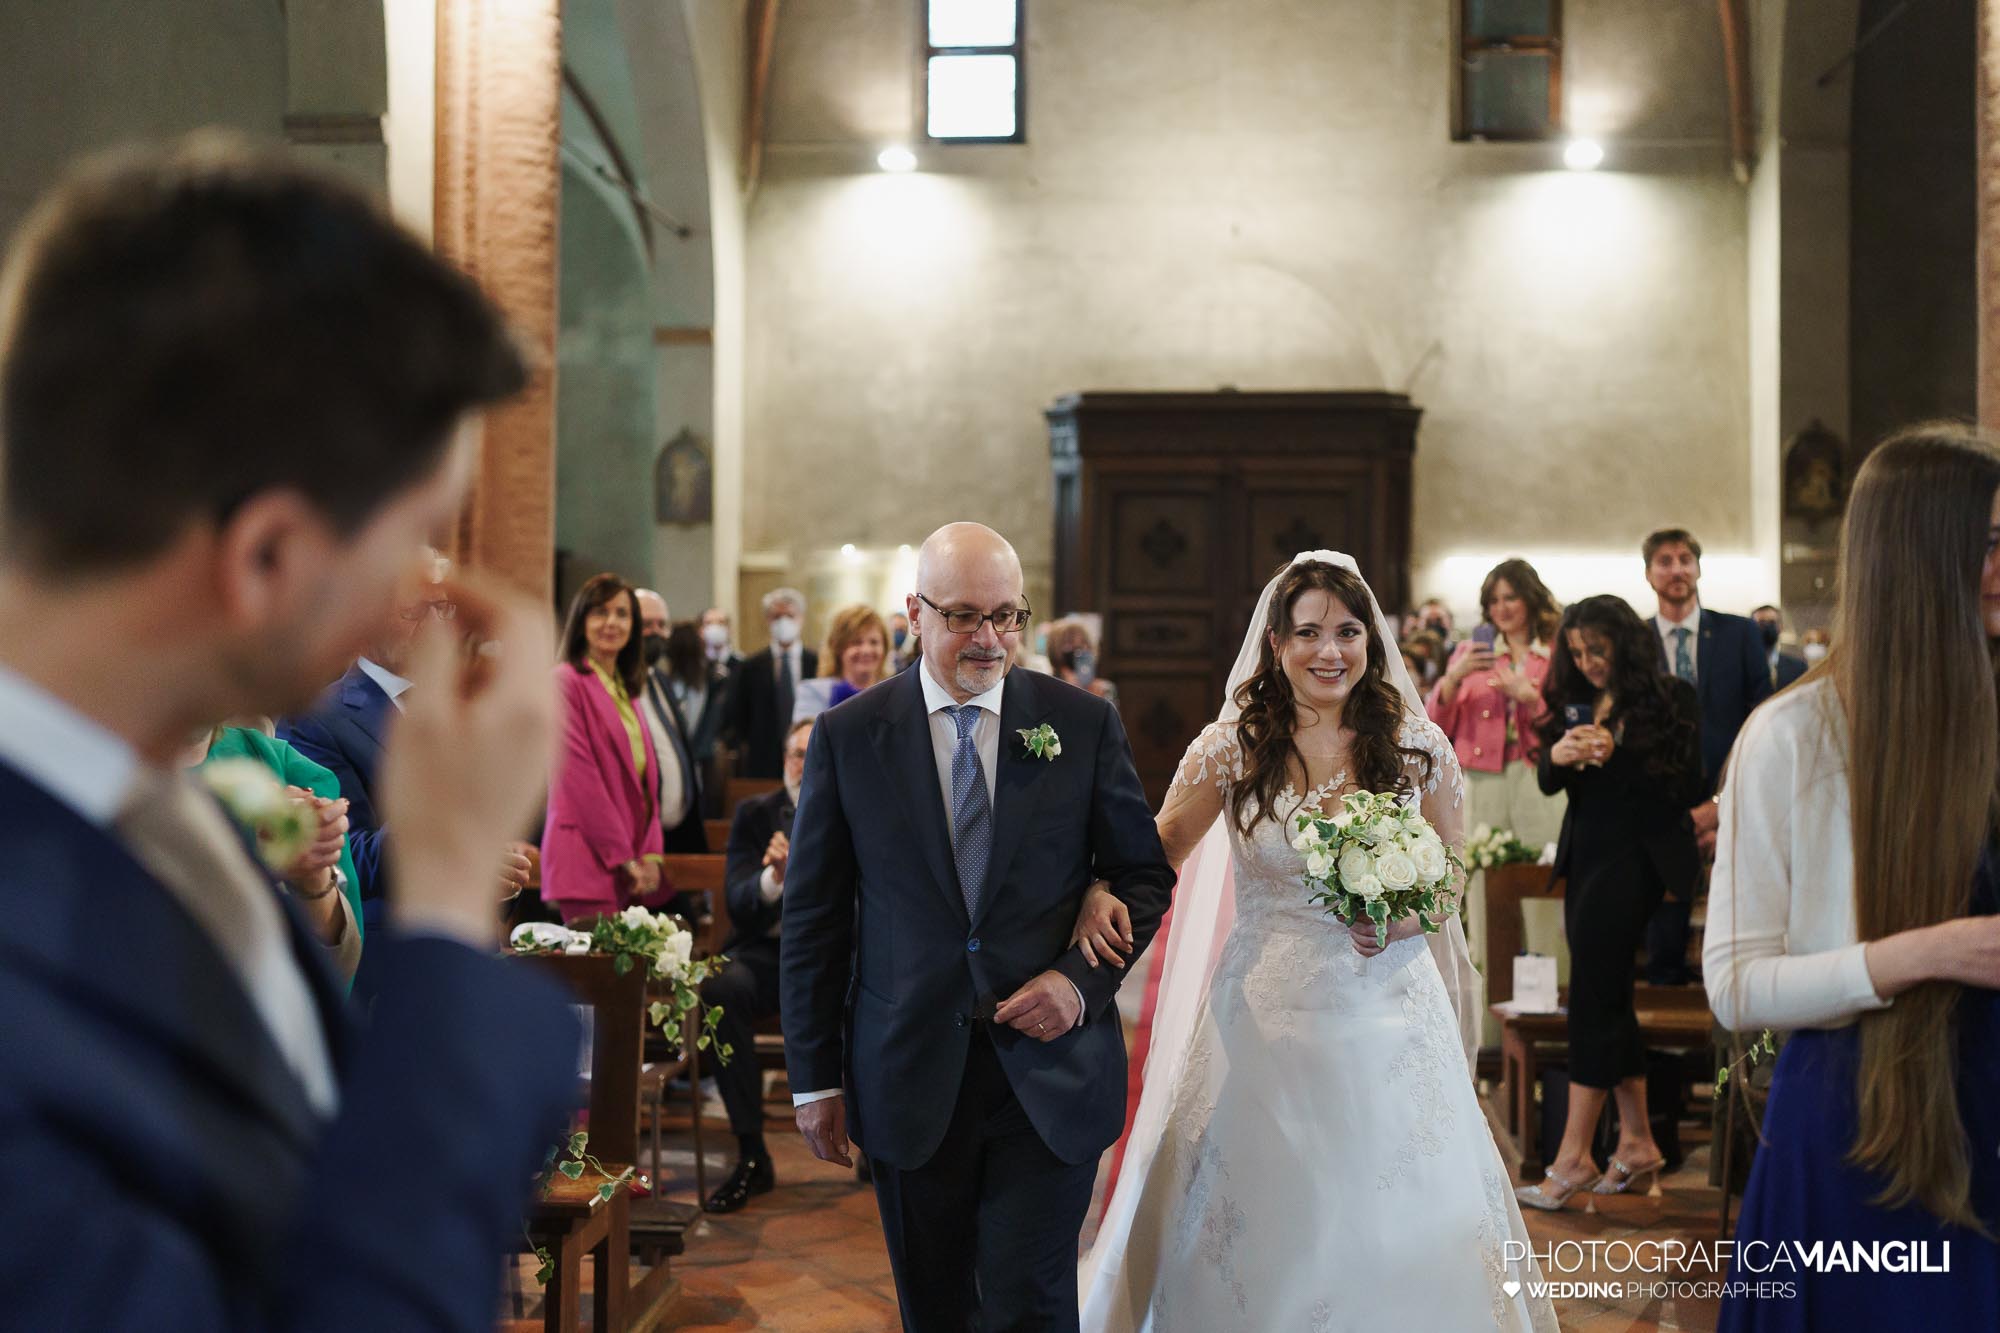 027 foto nozze wedding reportage ingresso sposa rito religioso chiesa milano chiara oliviero